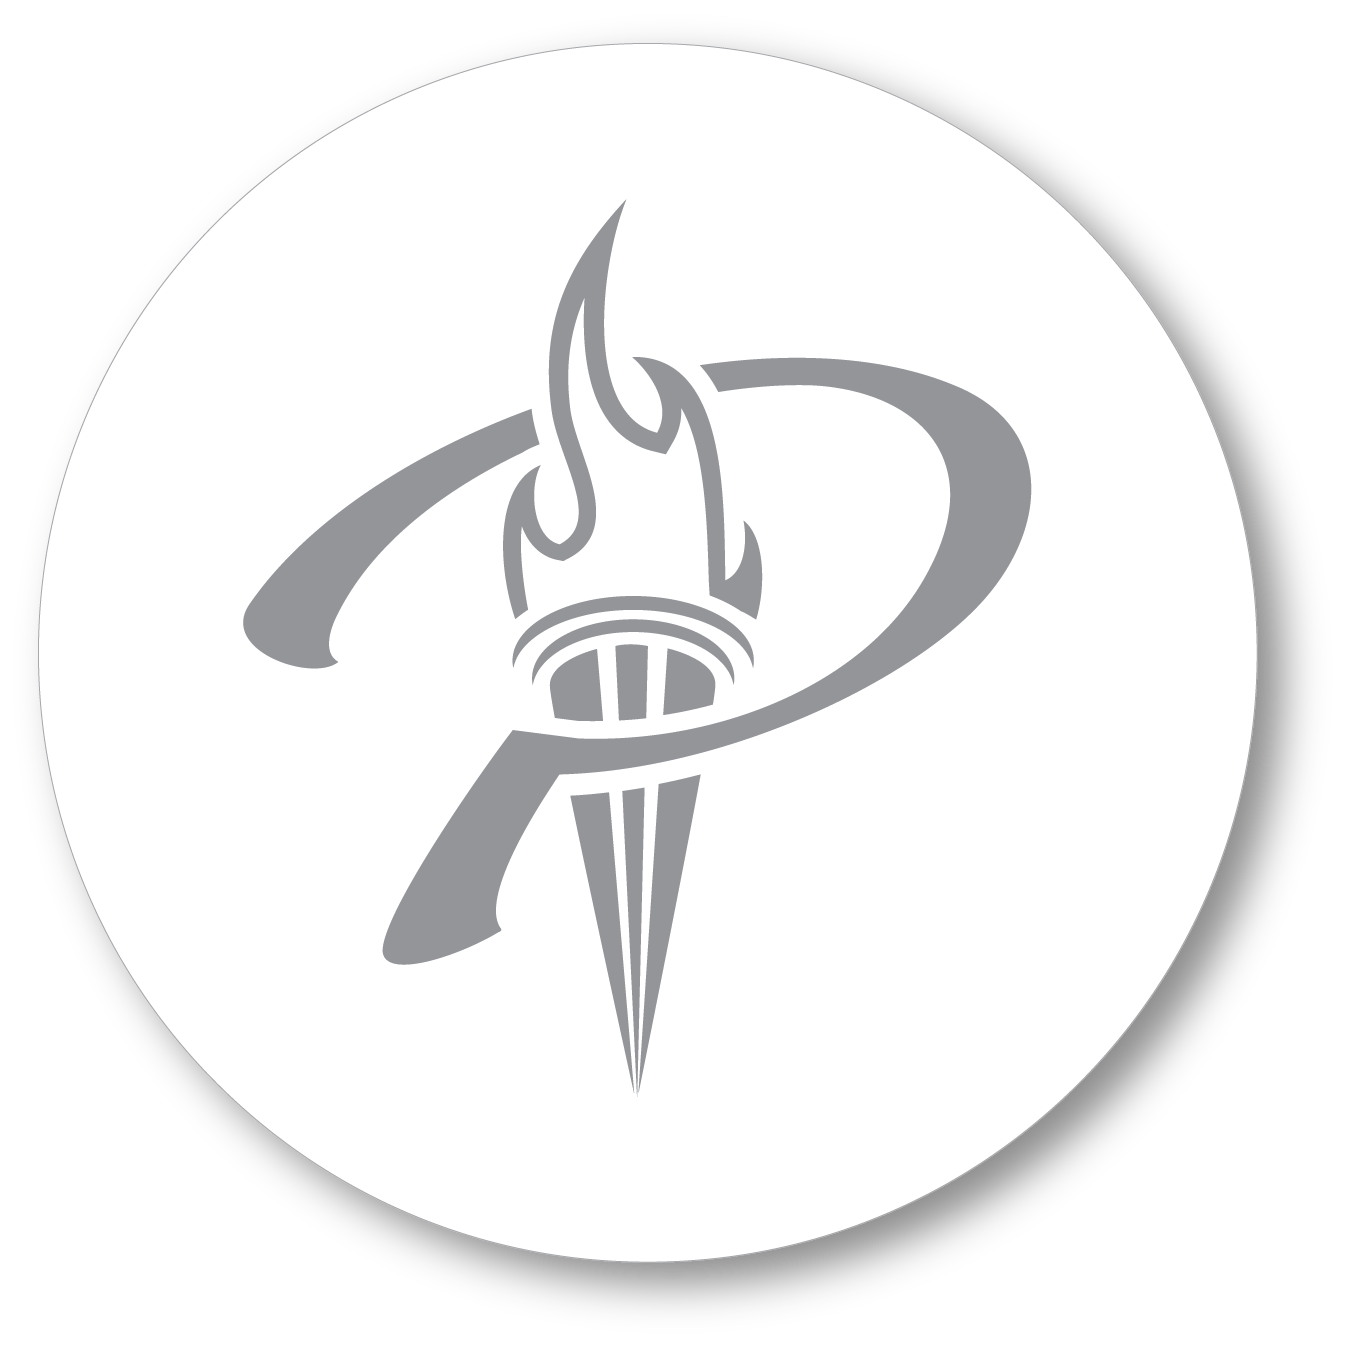 PISD Logo